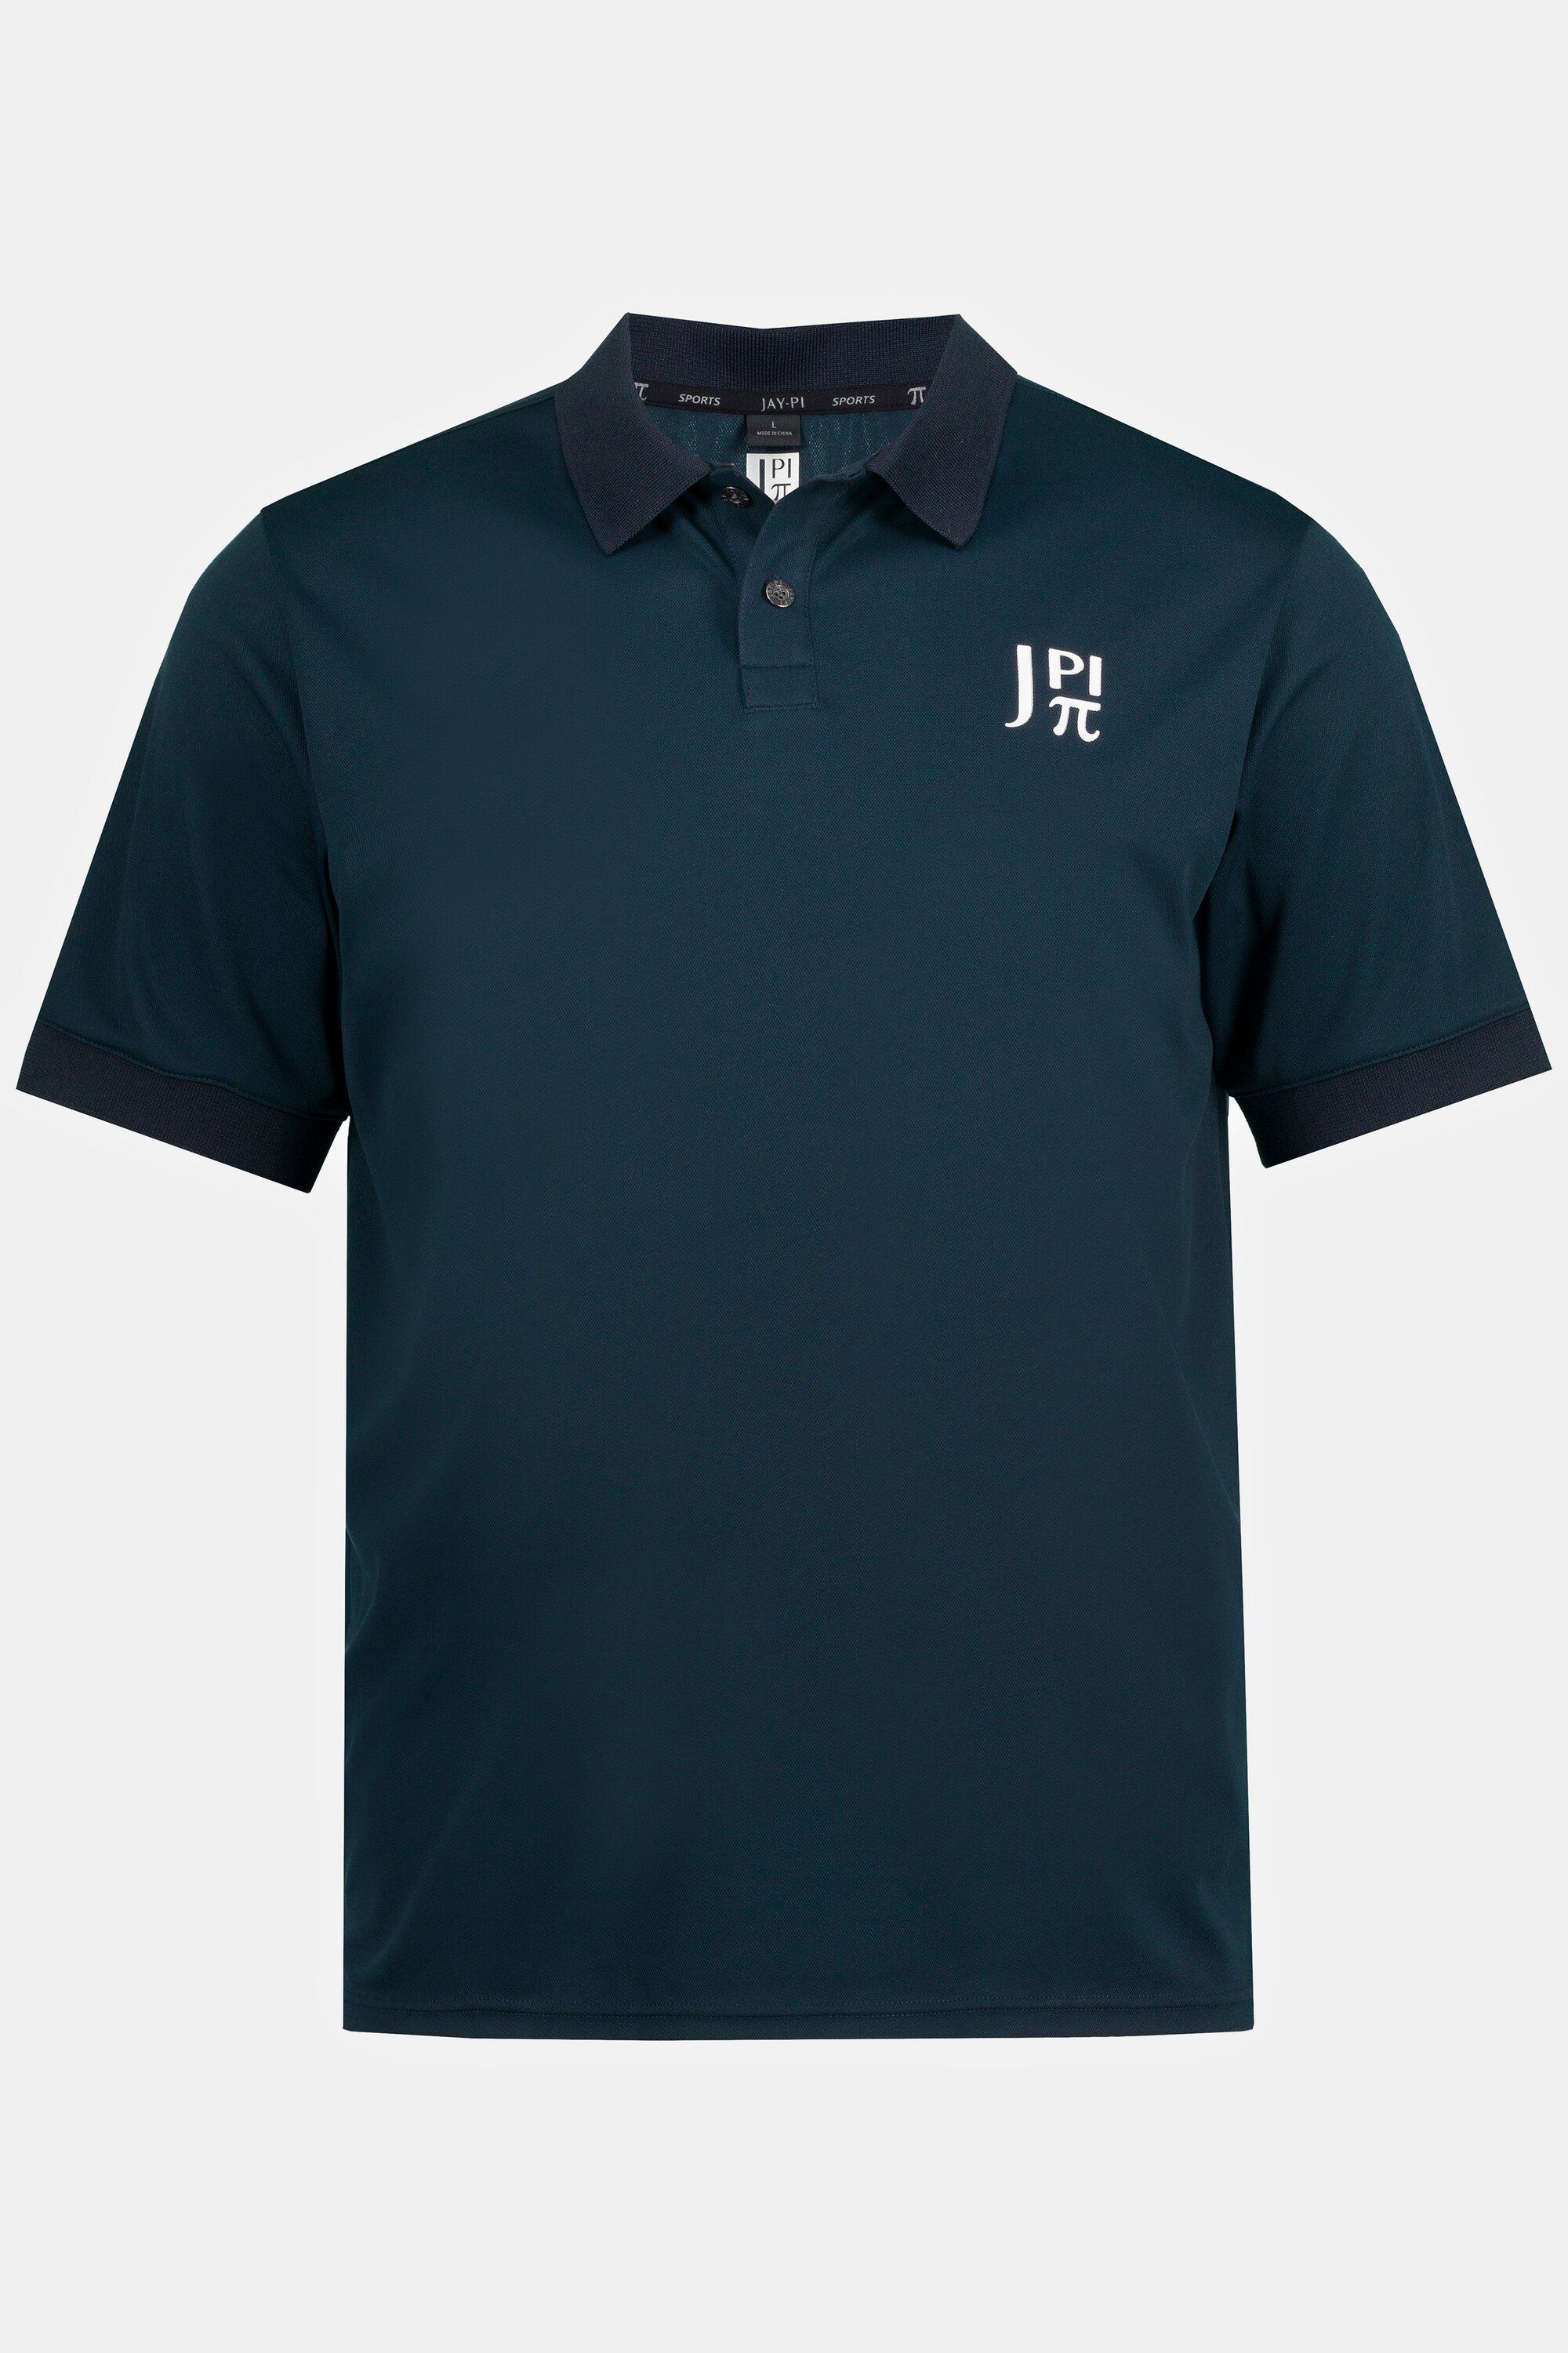 Halbarm Poloshirt blau JP1880 navy Golf Poloshirt